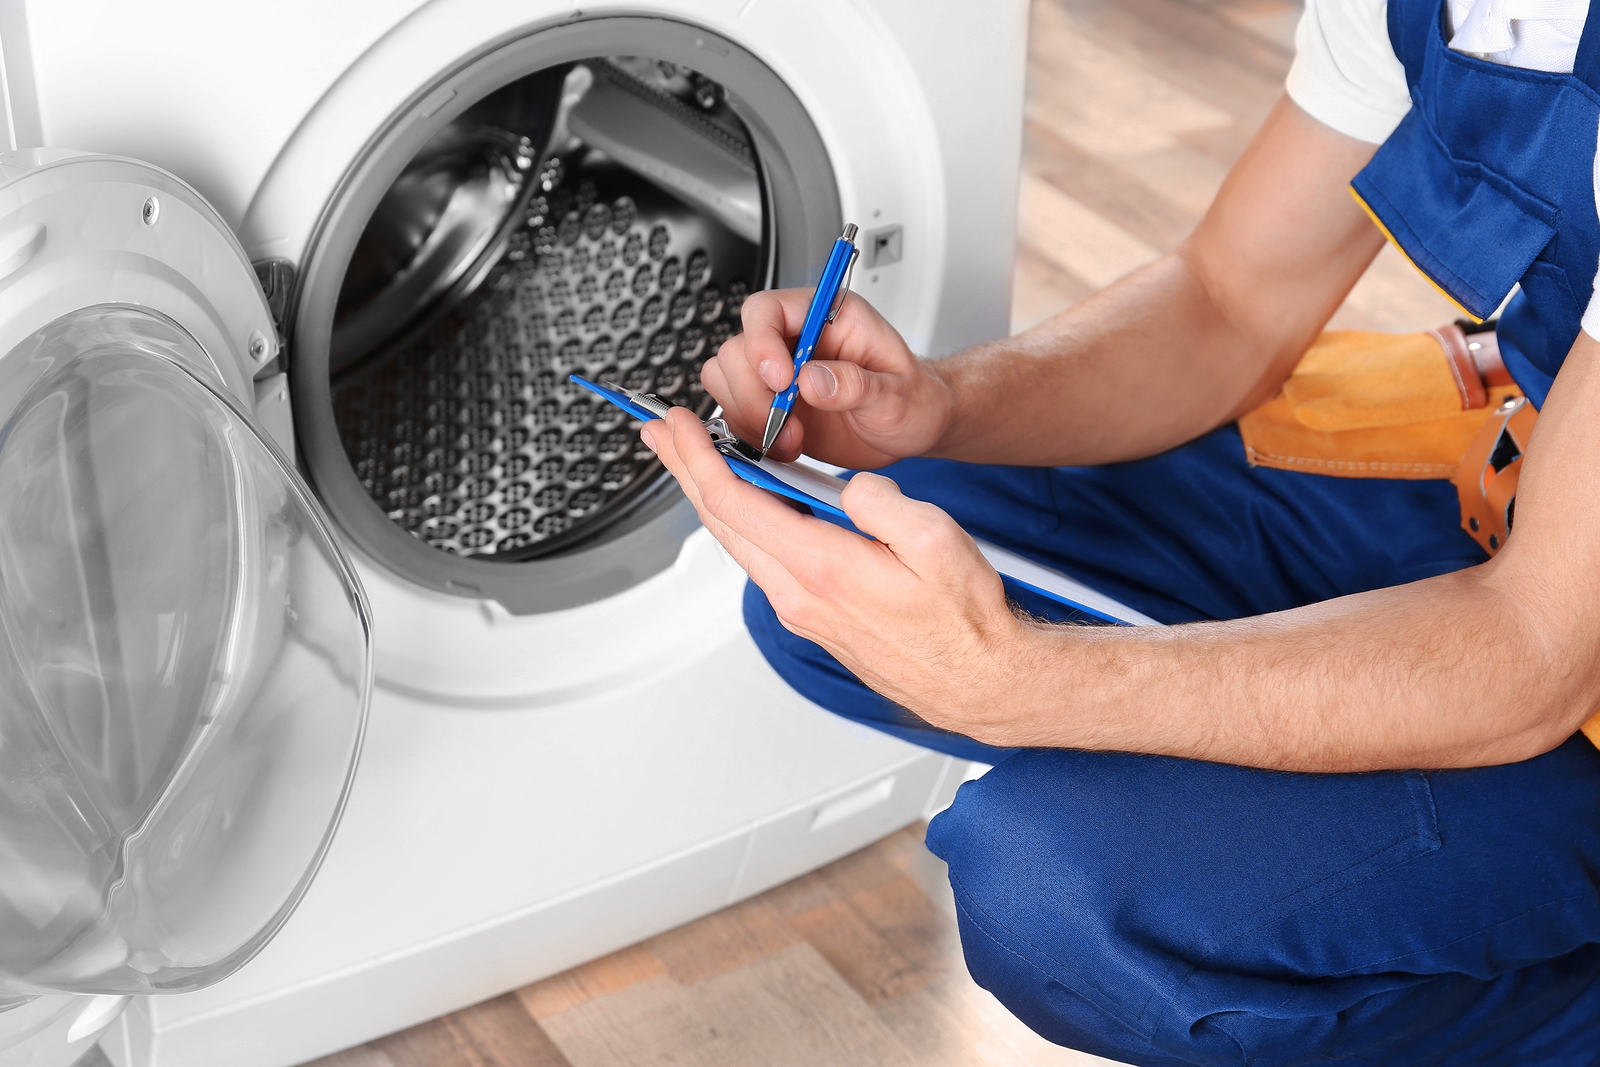 Washing machine repair Images, Stock Photos & Vectors   Shutterstock